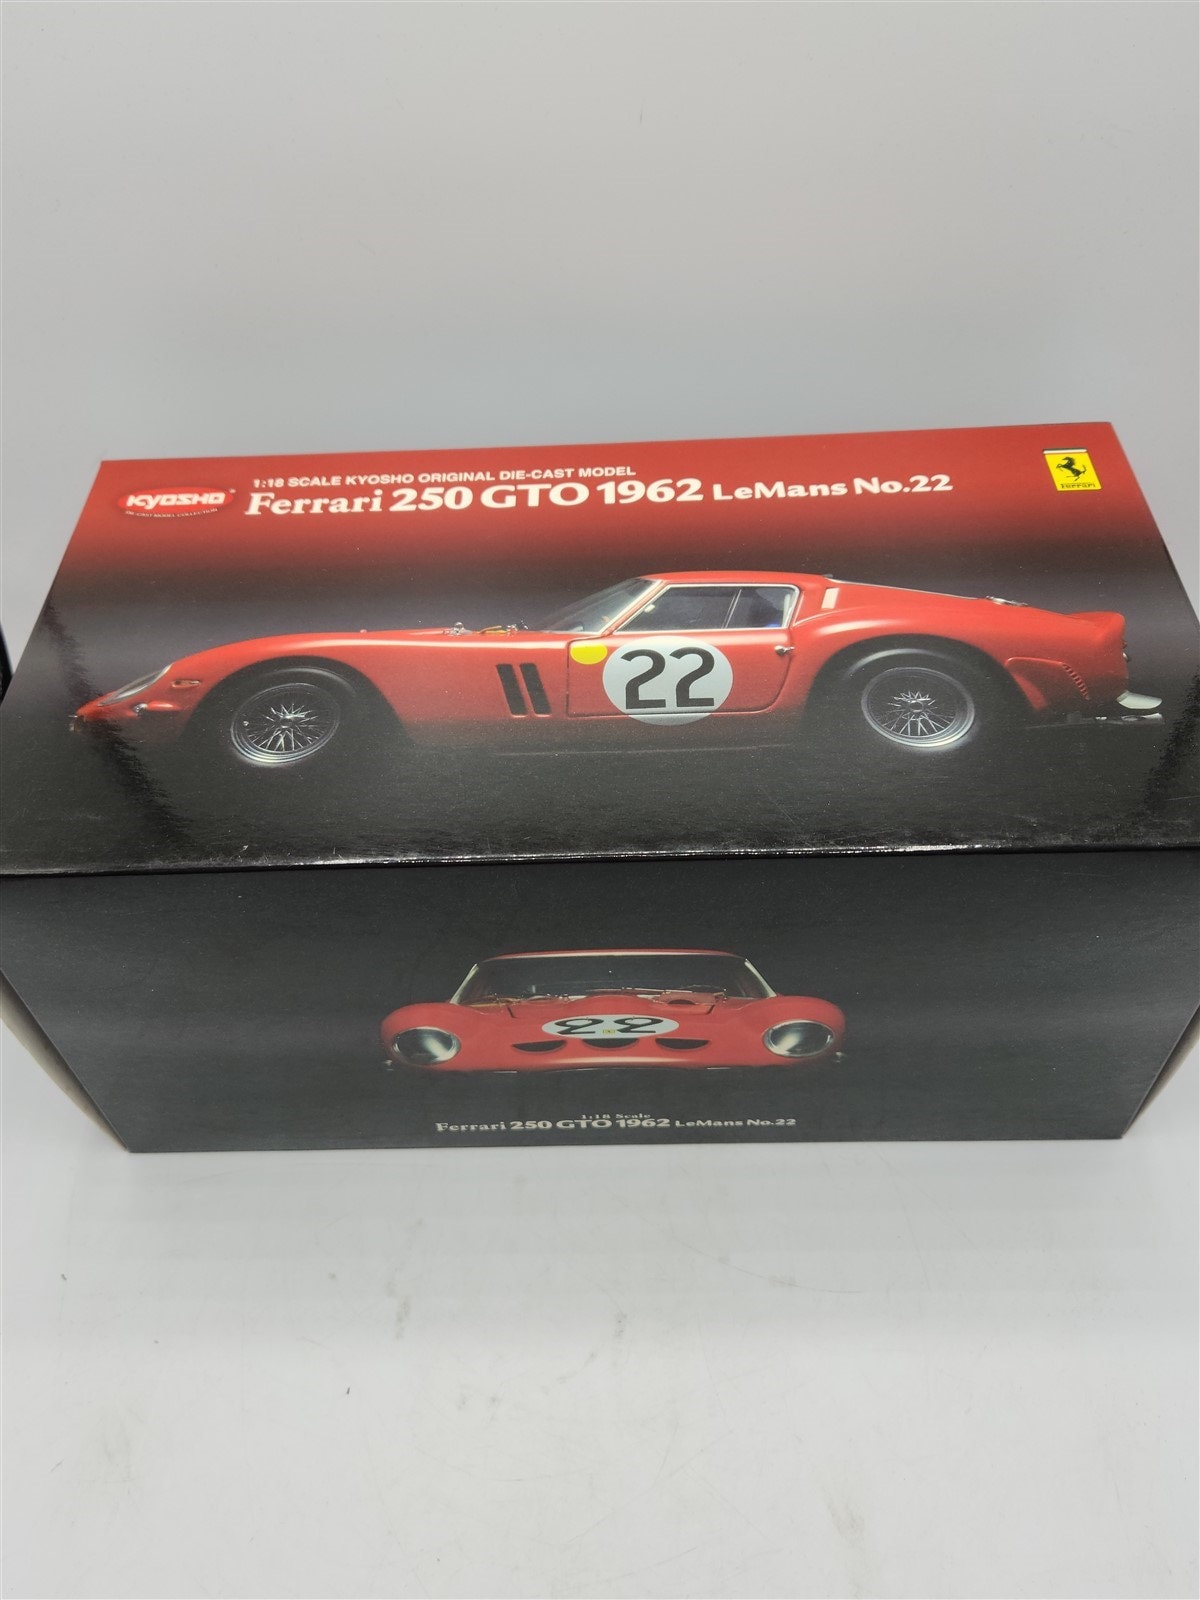 Ferrari Ferrari 250 GTO 1962 Le Mans model in 1:18 scale Man